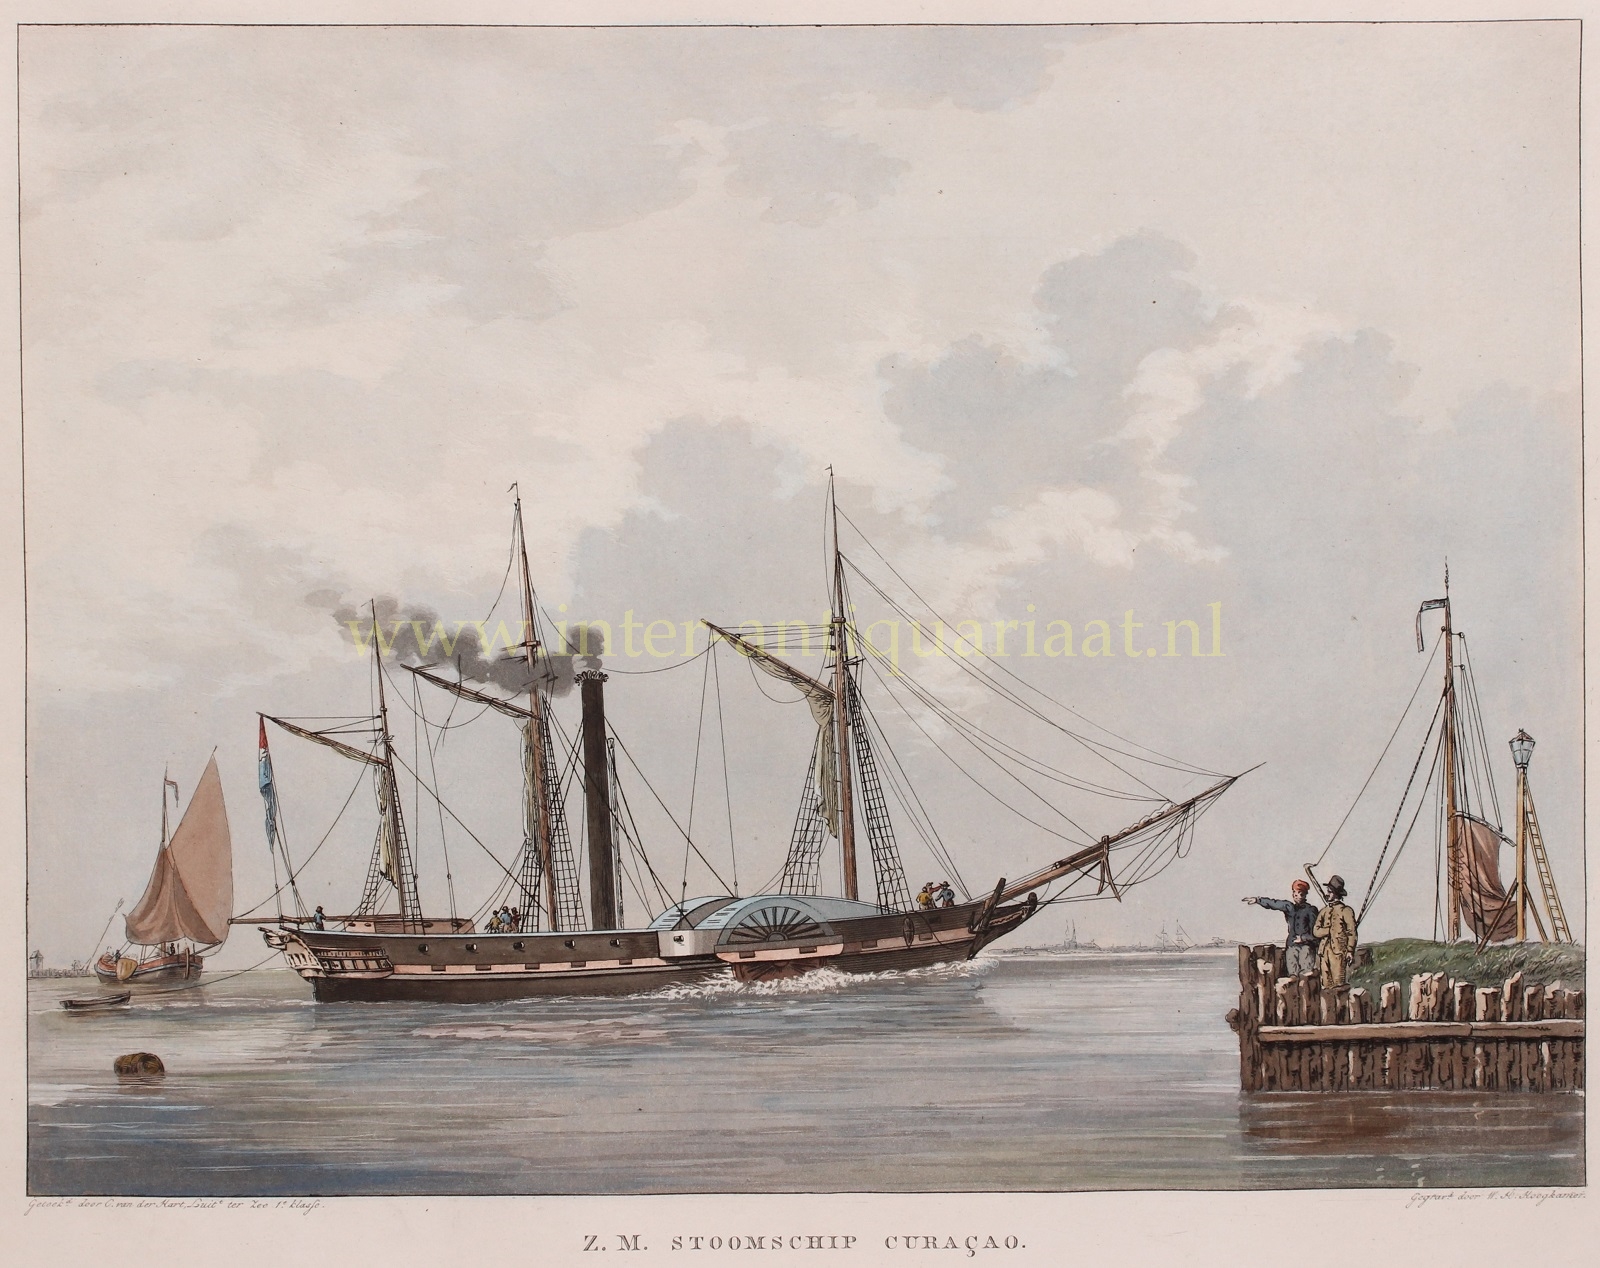 Hoogkamer-- W.H. - First steamship of the Dutch navy - Willem Hendrik Hoogkamer after Christoffel van der Hart, c. 1830